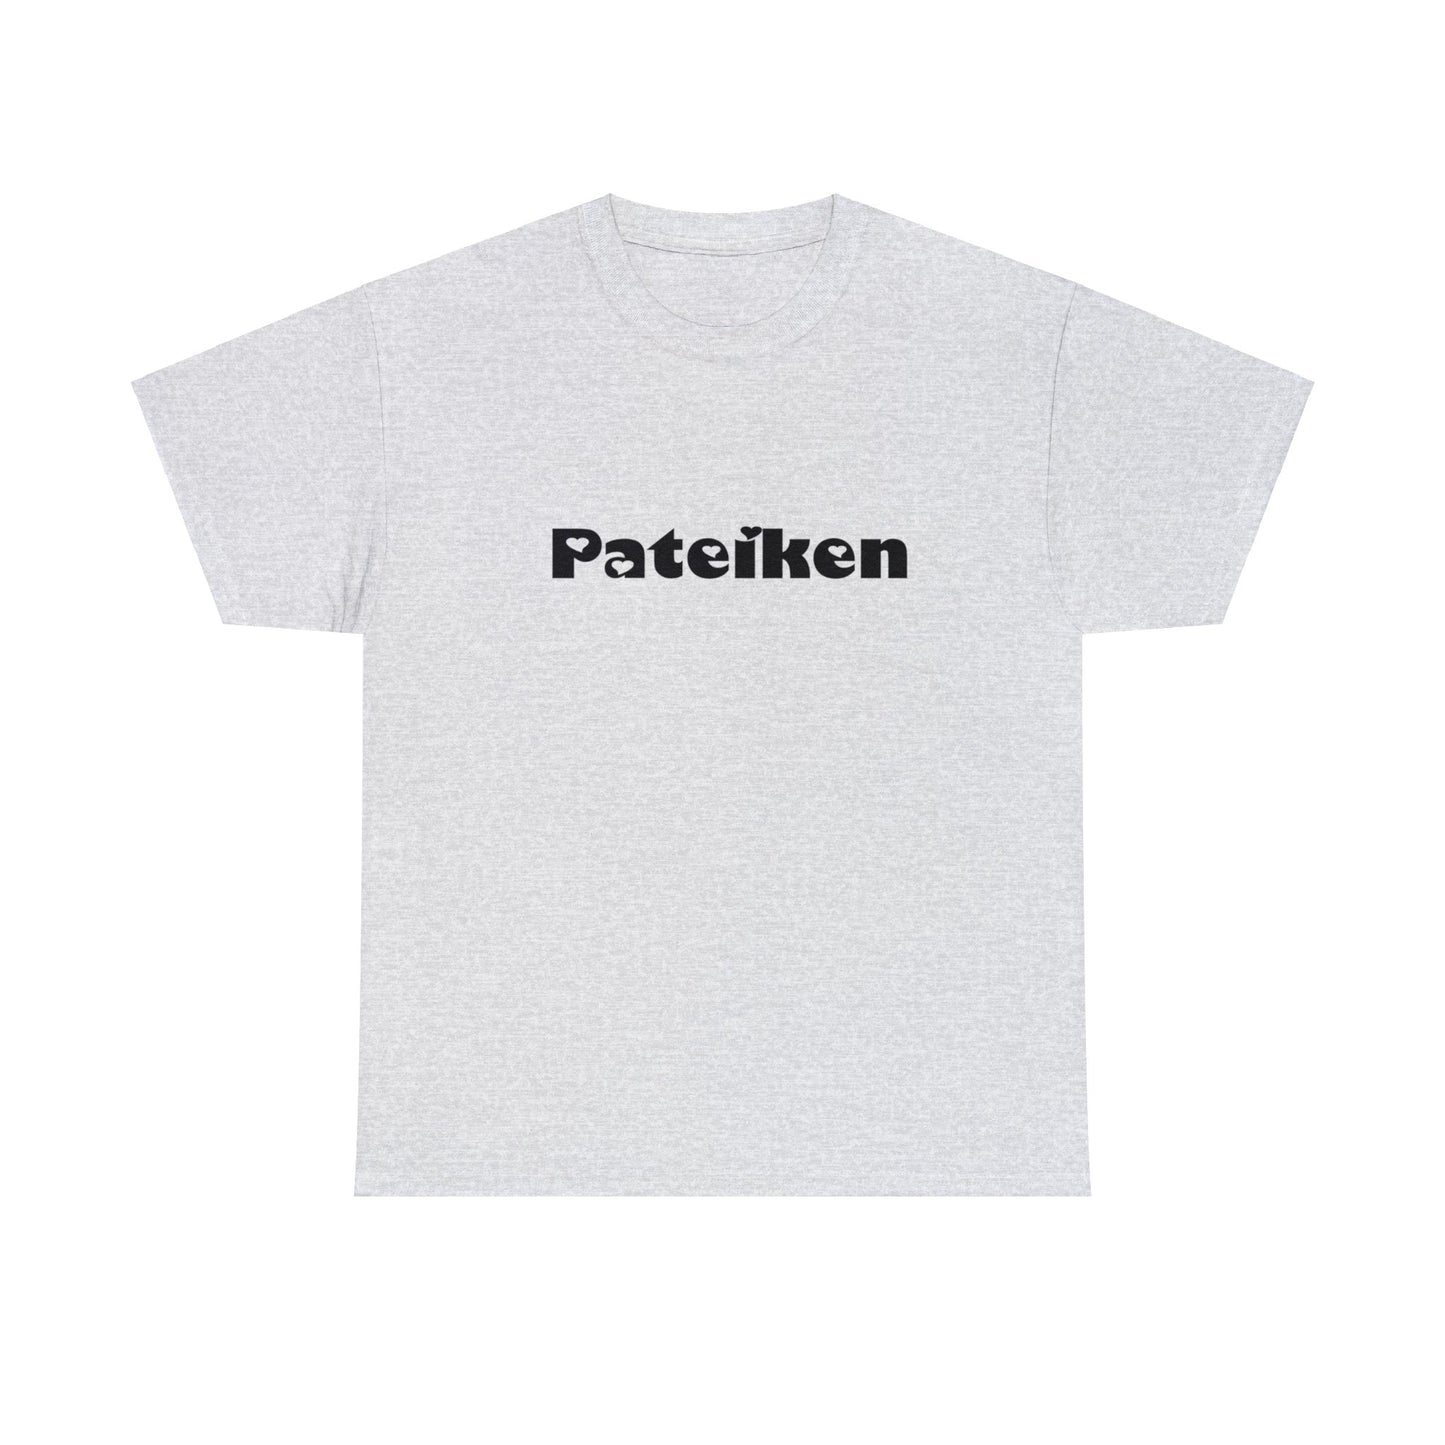 Int Oilsjters - Tshirt - Pateiken